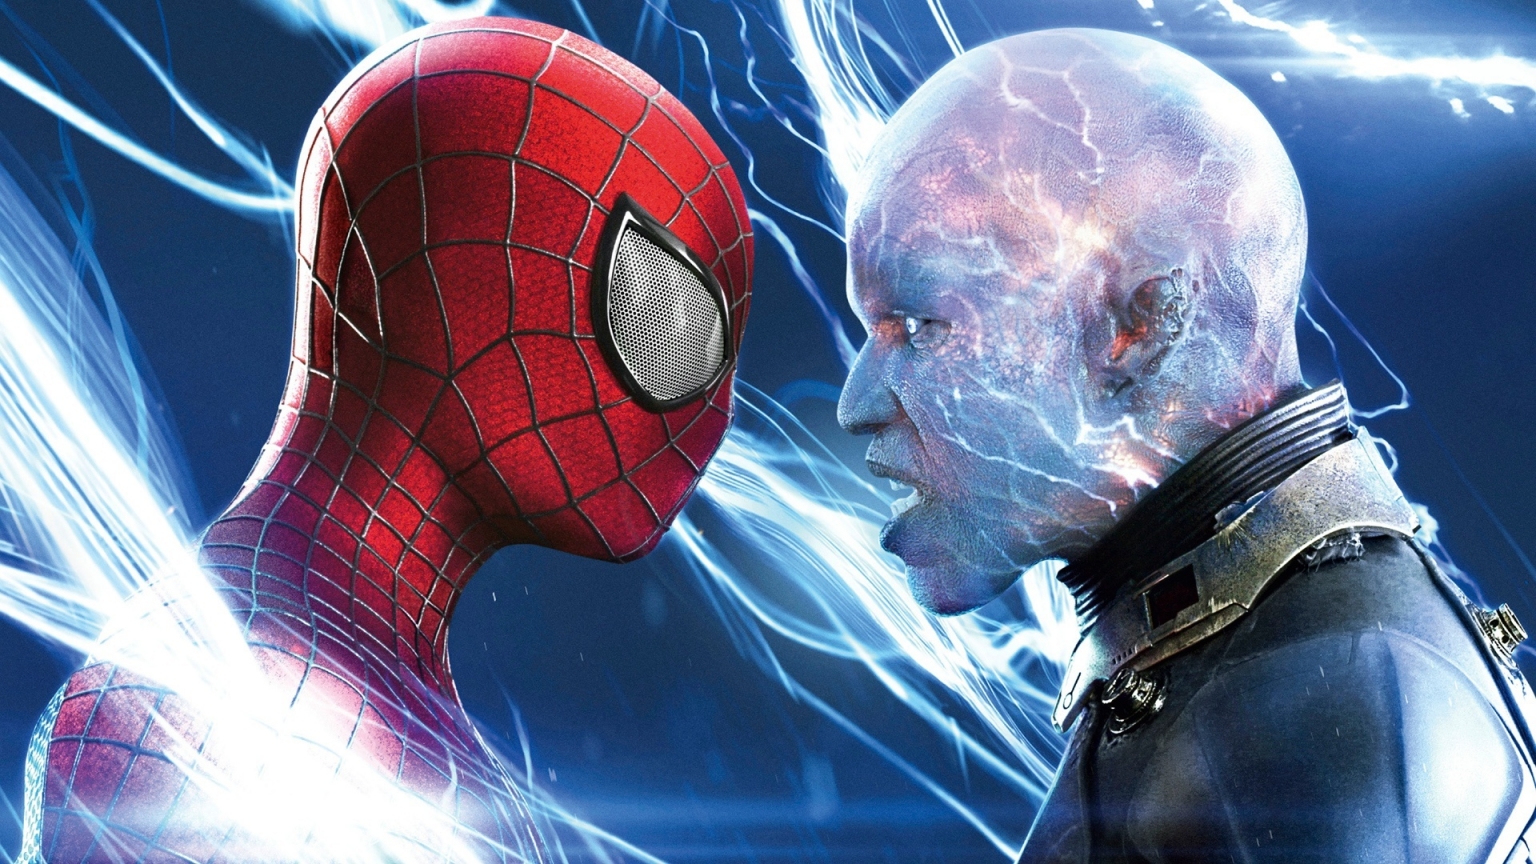 Spiderman vs Electro for 1536 x 864 HDTV resolution